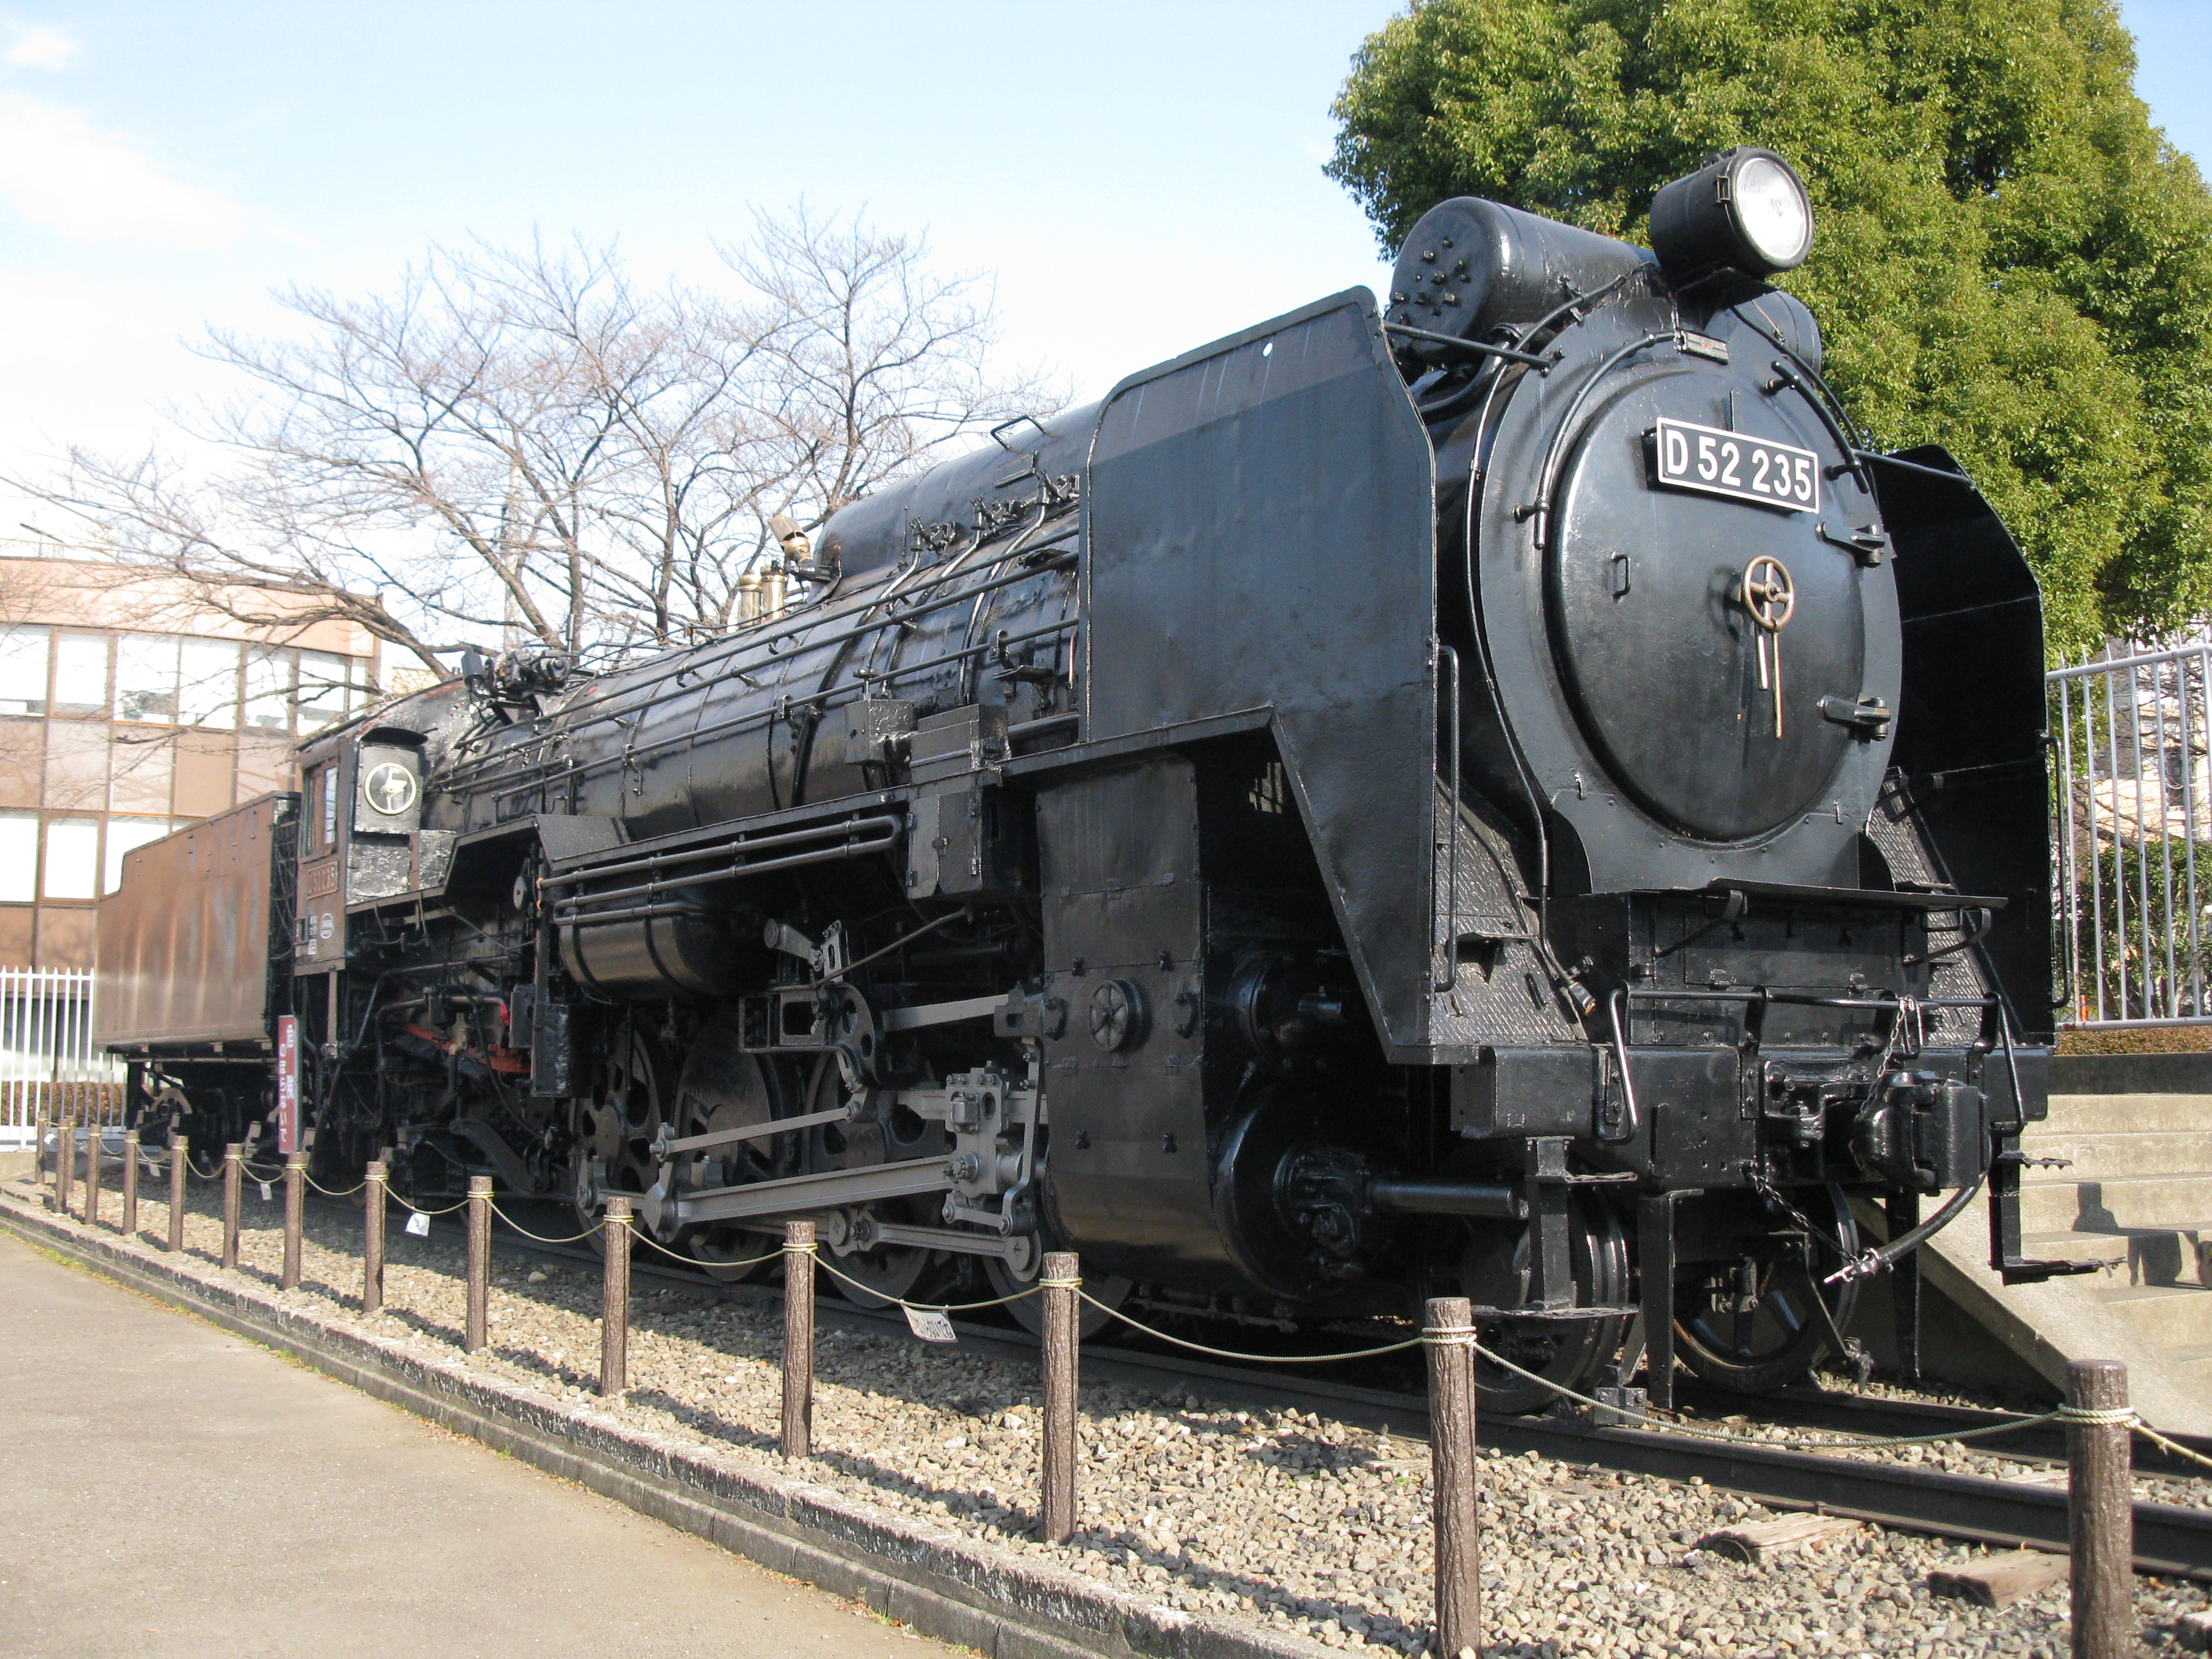 File:Japanese-national-railways-D52-235-20110123.jpg - Wikipedia